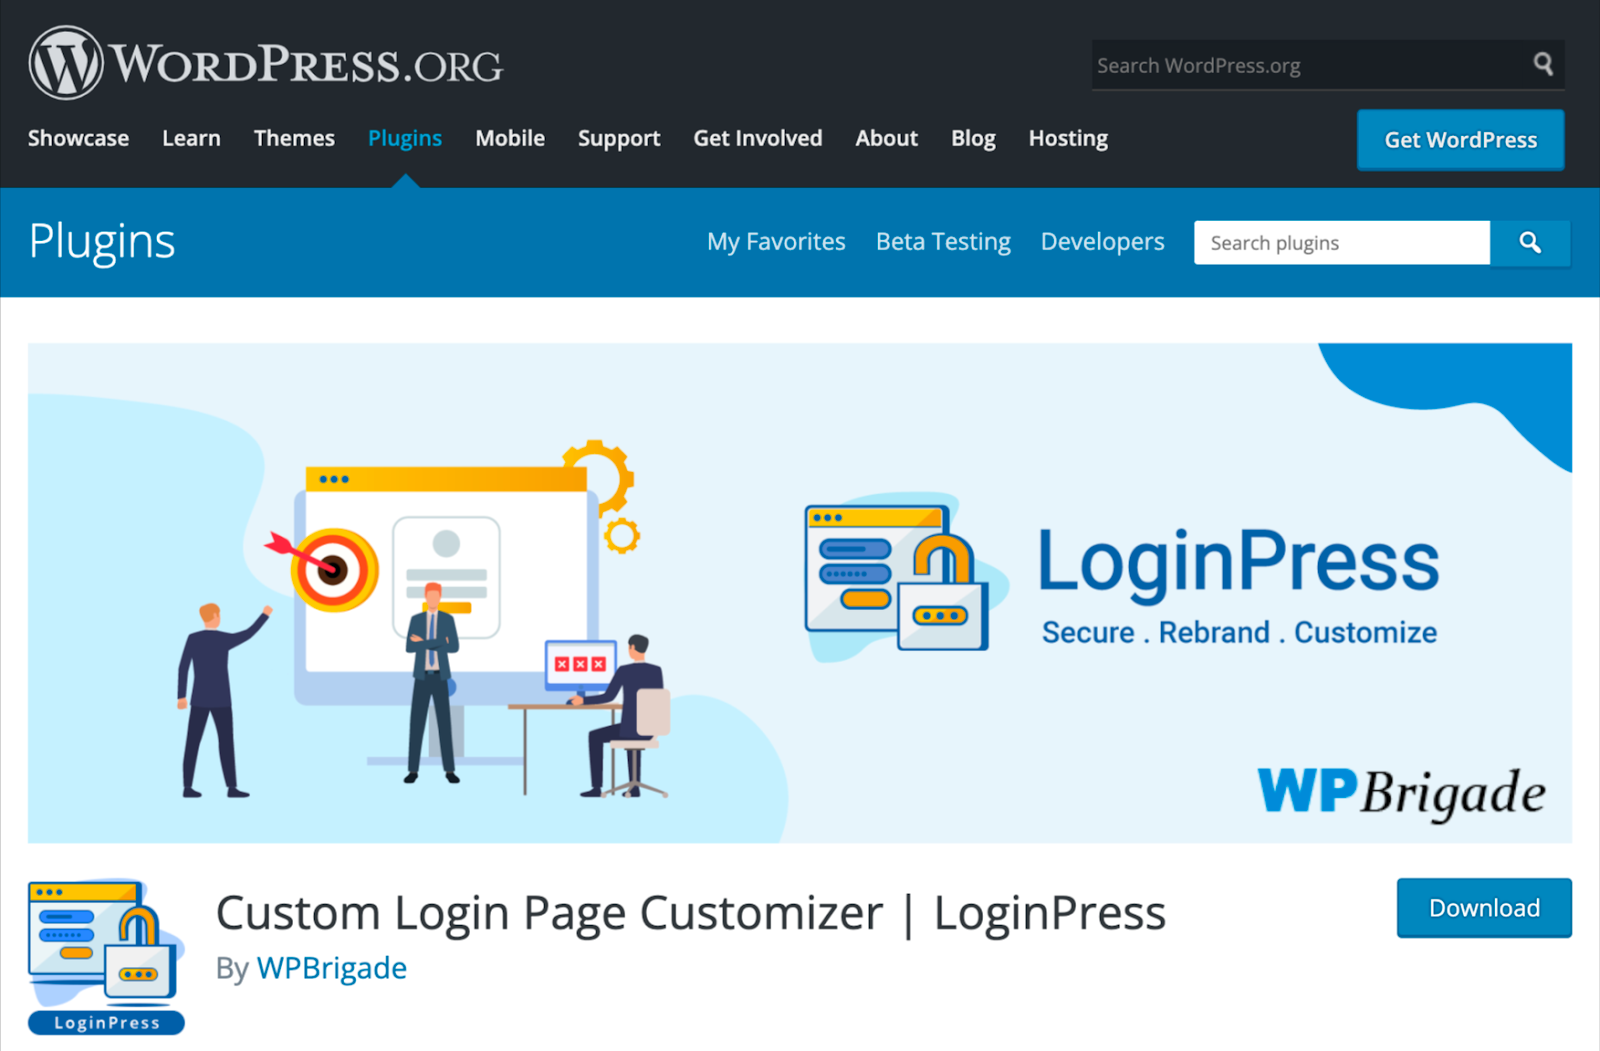 Create a customized WordPress dashboard with the Custom Login Page Customizer plugin